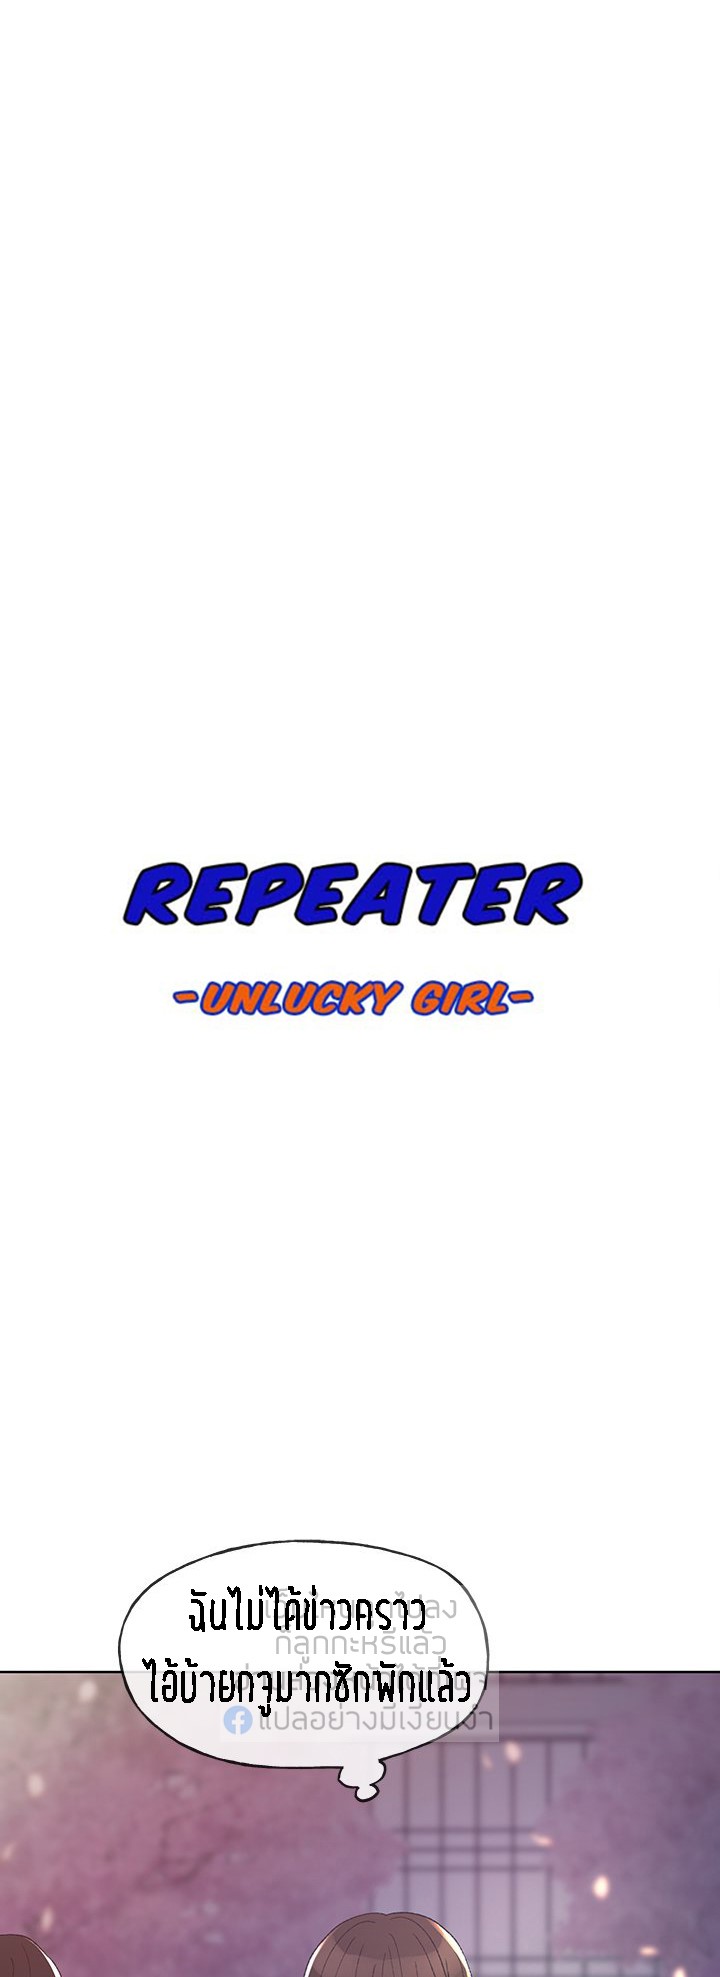 Repeater 54 01